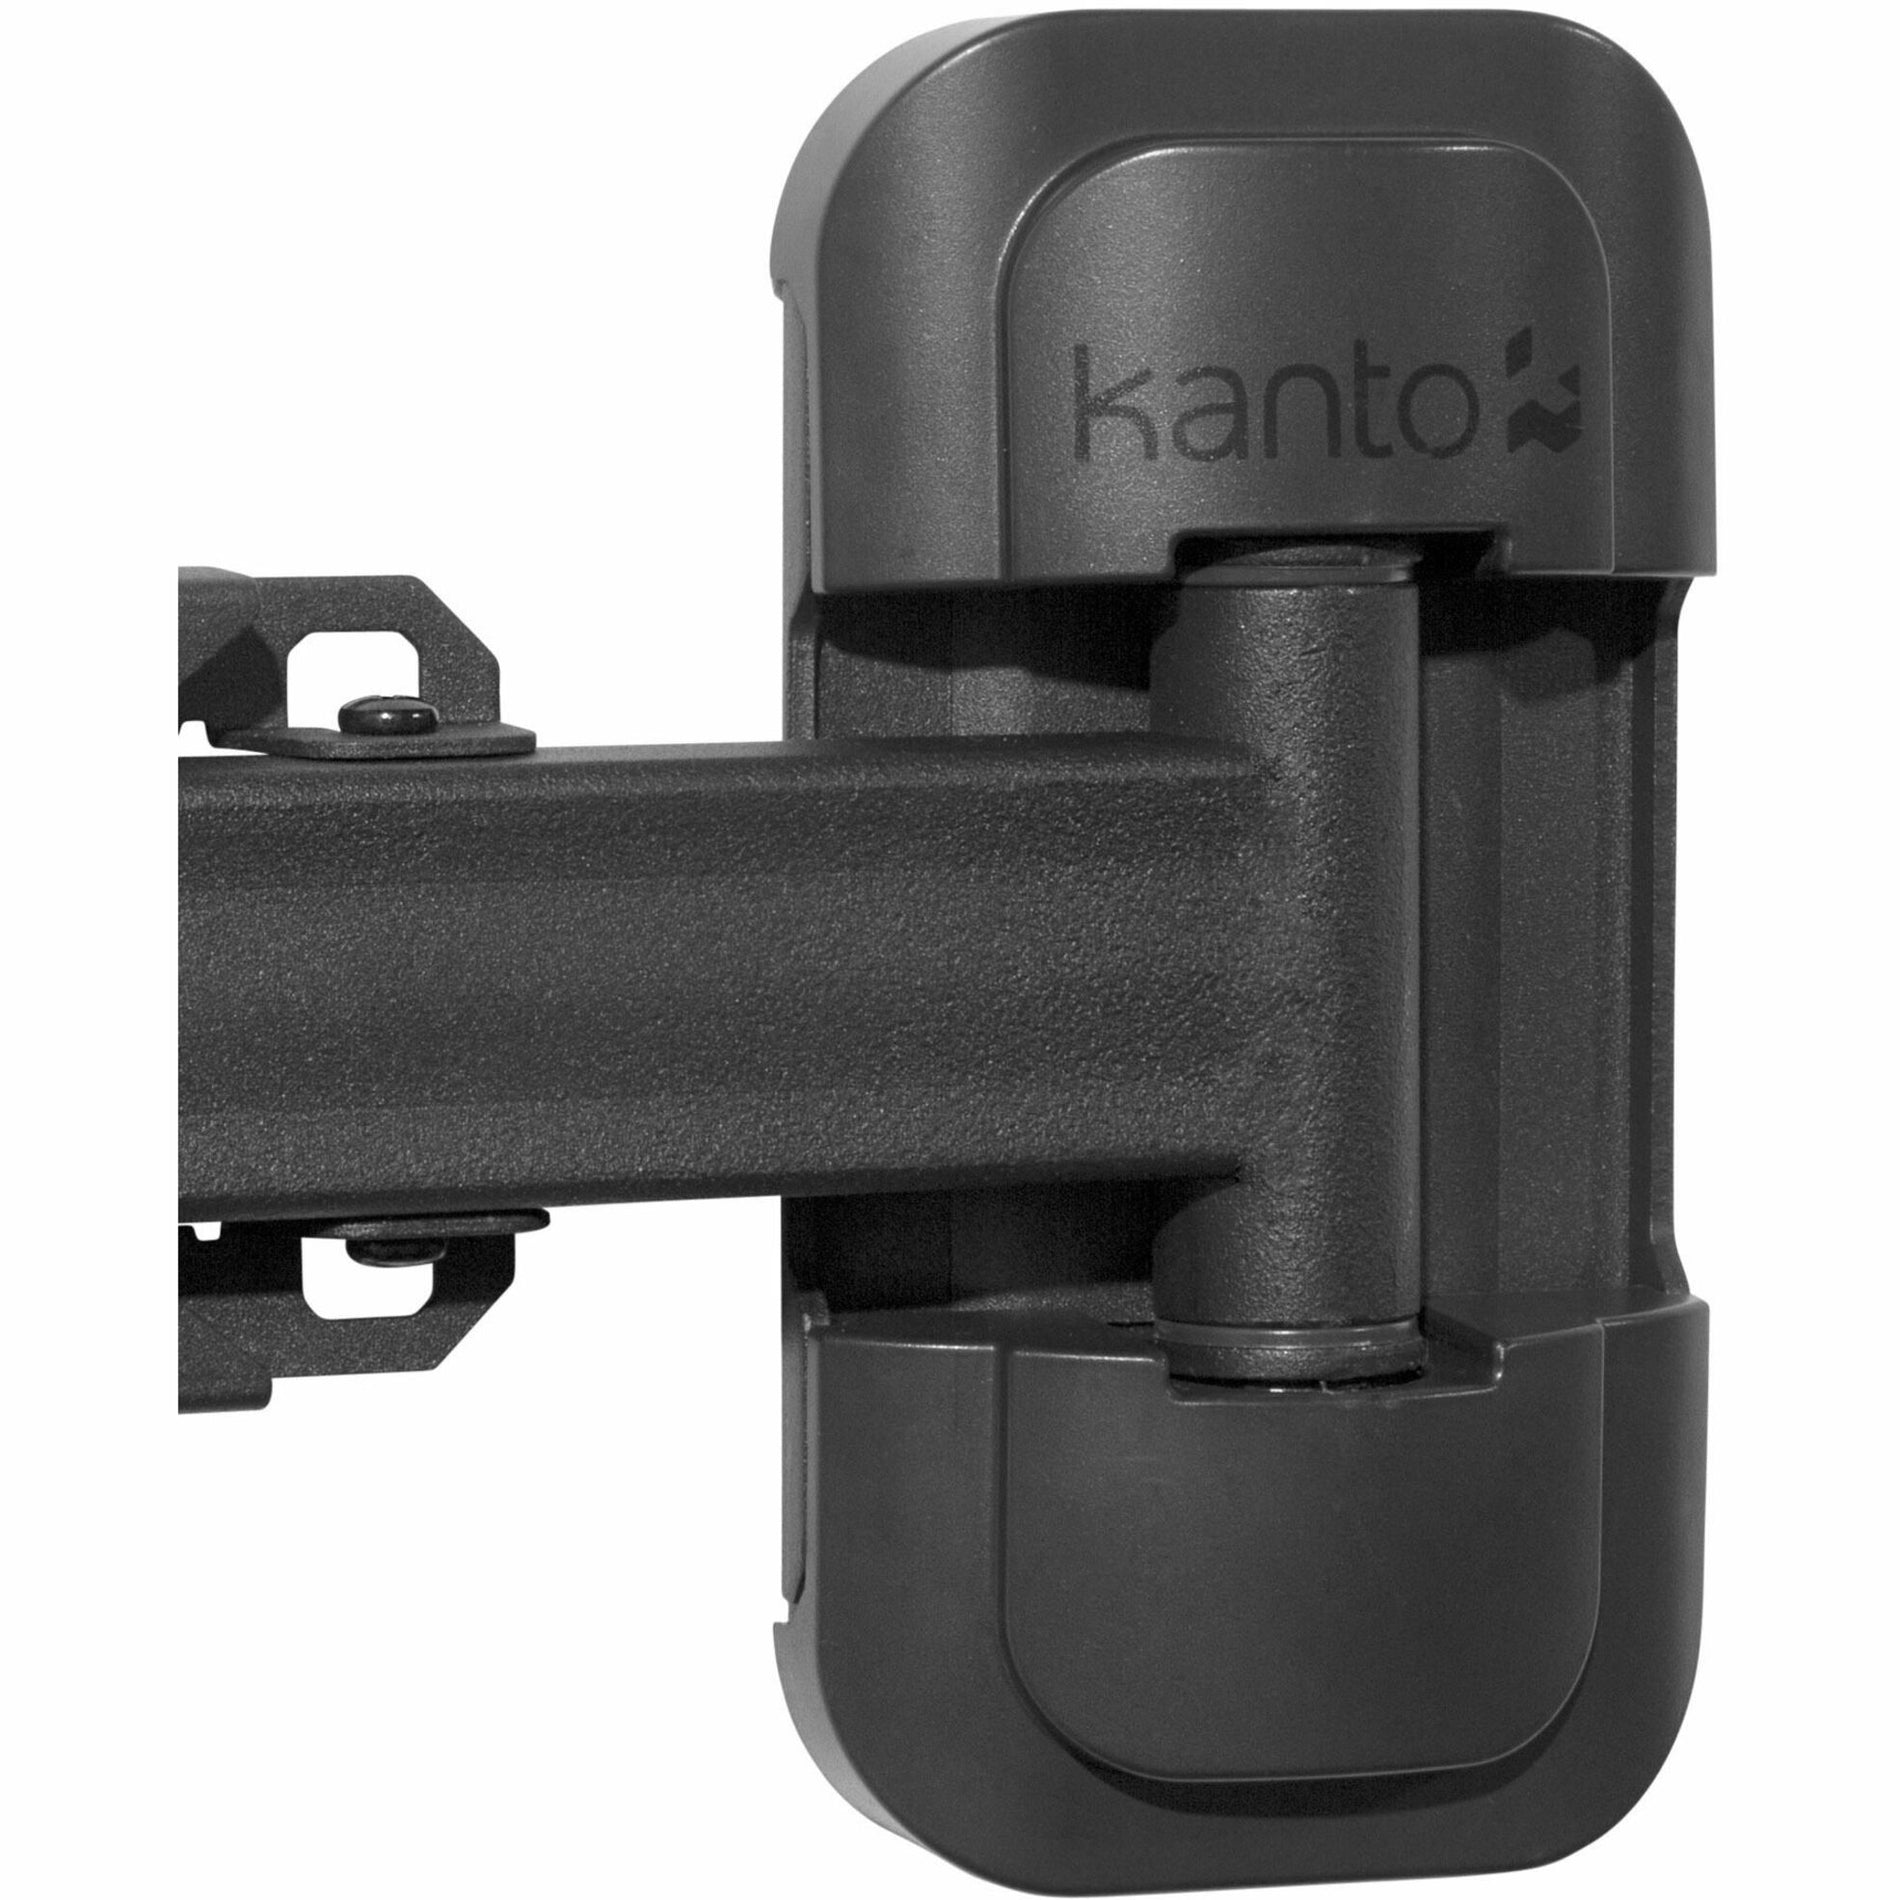 Kanto PS200 Full Motion TV Mount for 26" to 60" TVs - Supports 88 lb, Swivel, Tilt, Cable Management, Black